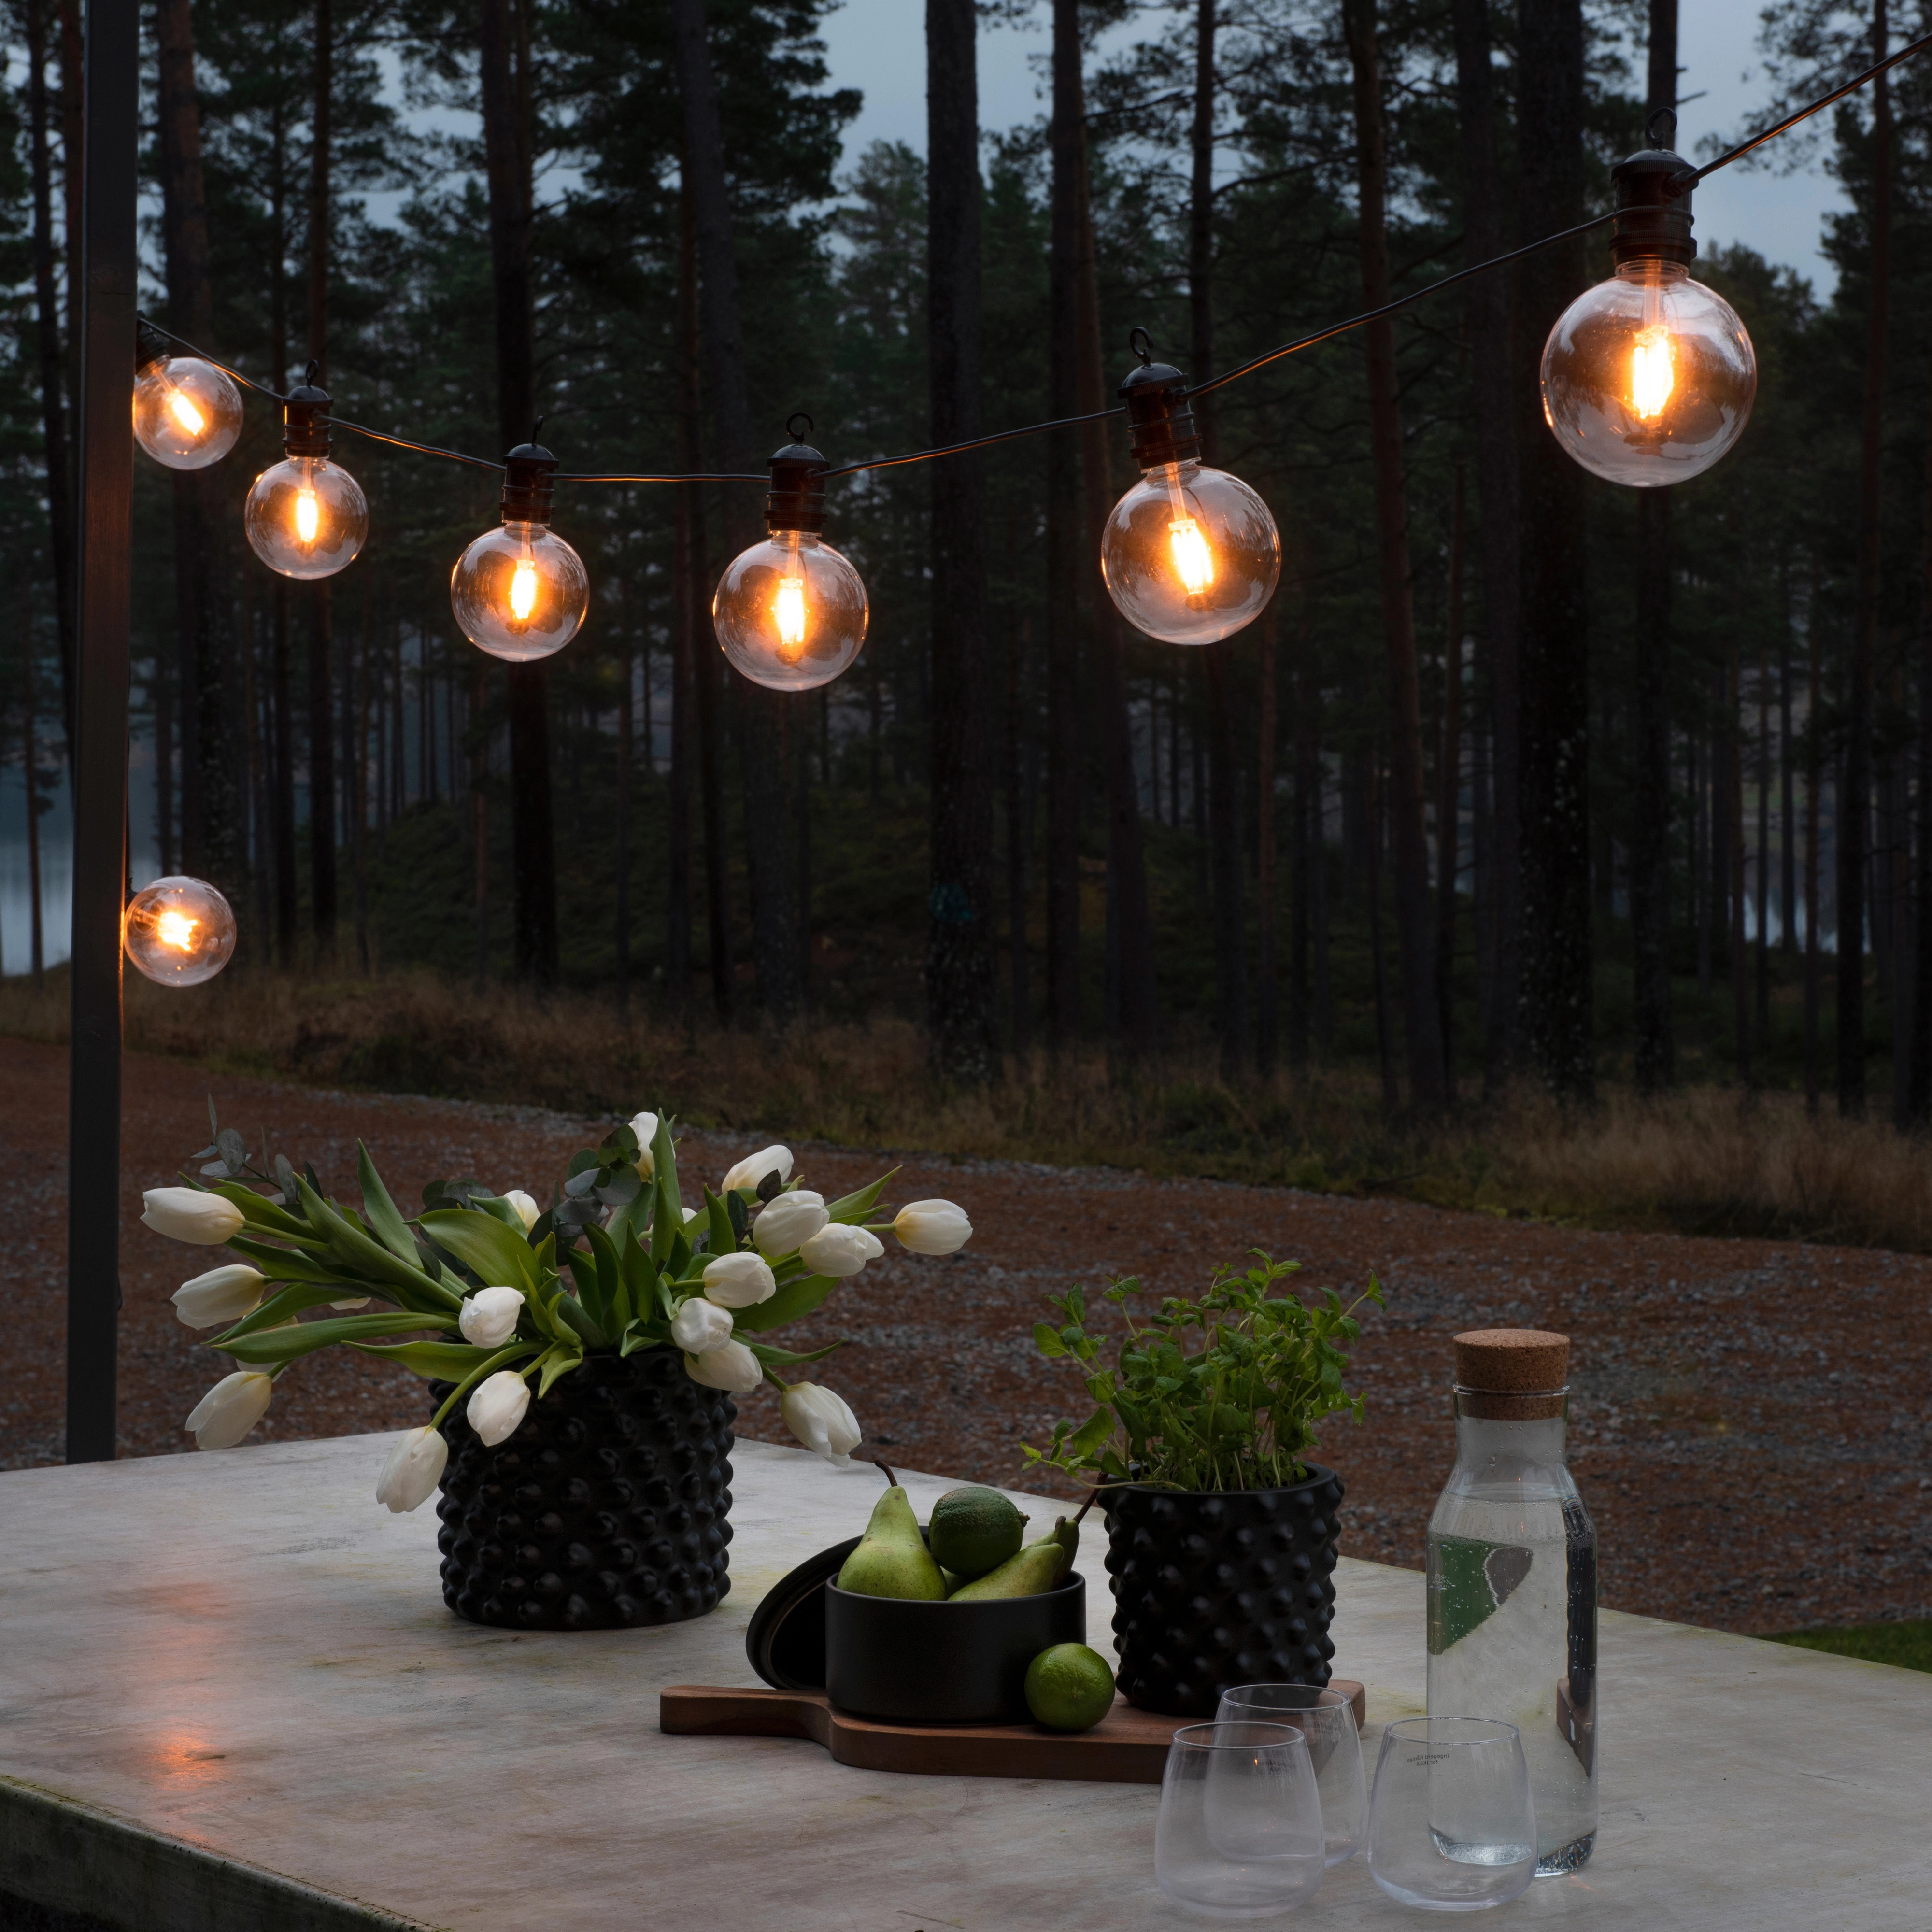 Konstsmide LED-Lichterkette Outdoor Retro kaufen Bernsteinfarben bei OBI LEDs 10 Globe